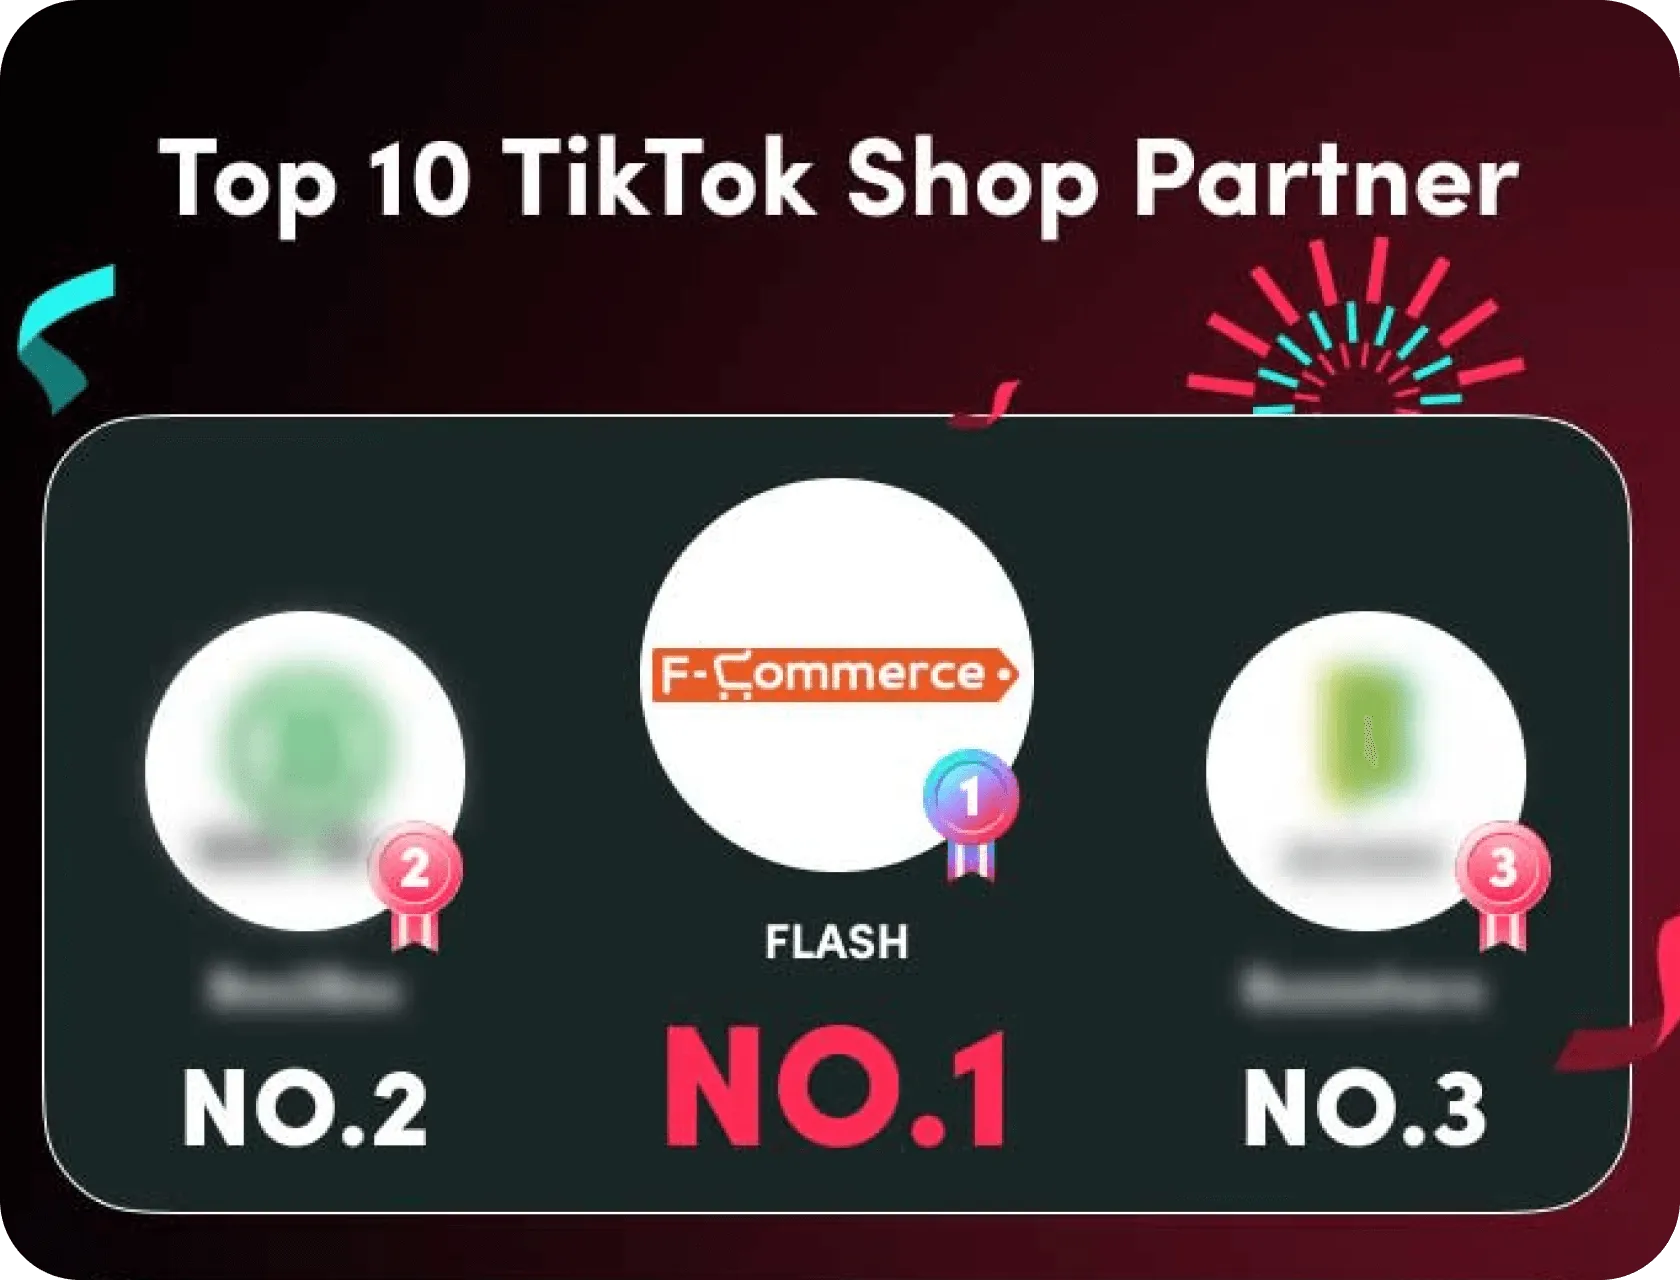 F-commerce become top 1 tiktok shop partner